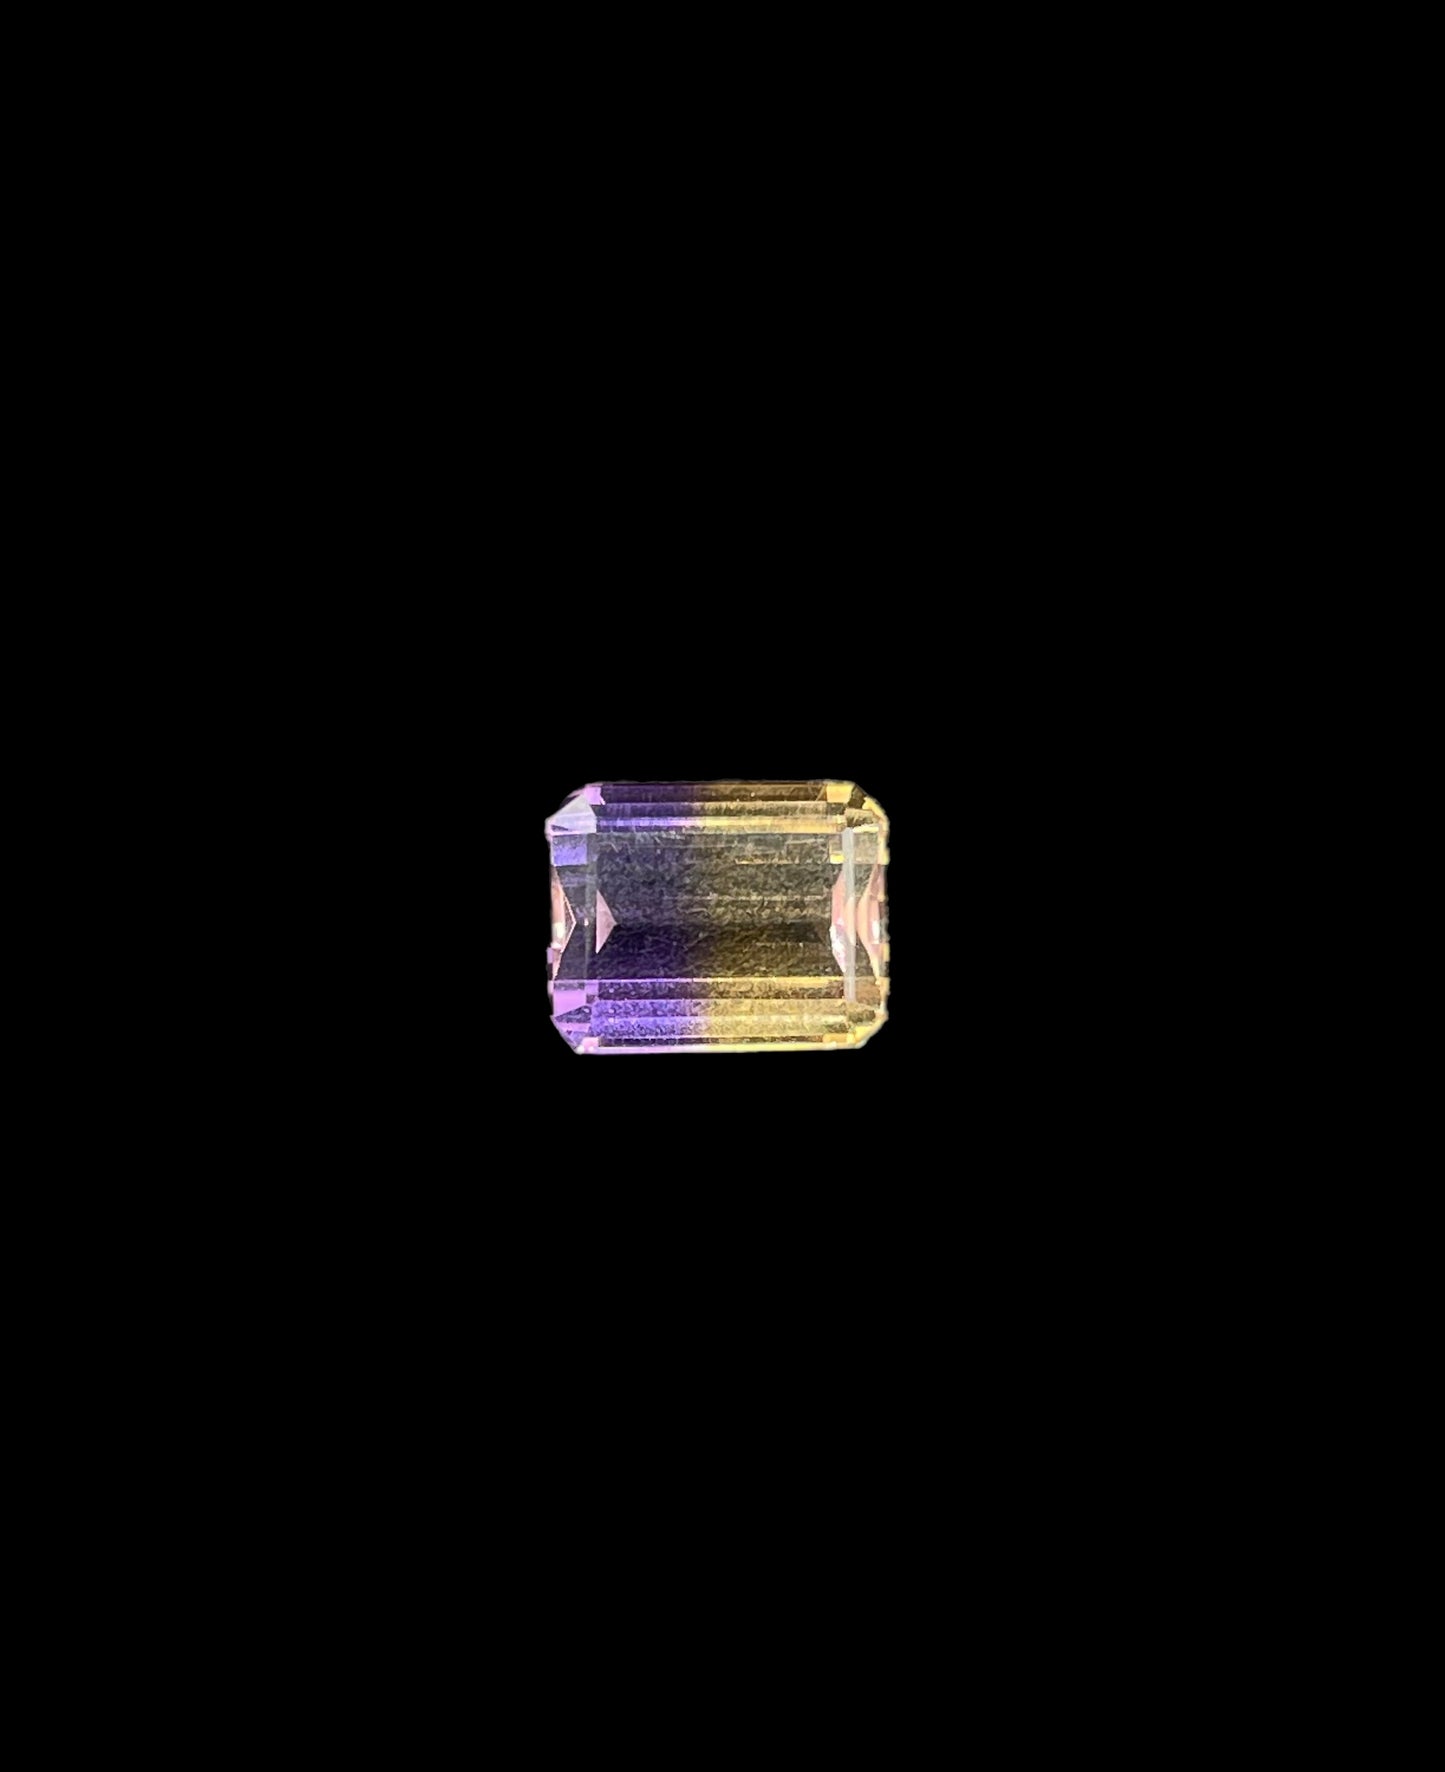 6.76 Carat Natural Ametrine Emerald Cut Loose Gemstone (11.3 x 8.7 x 6.5 MM)